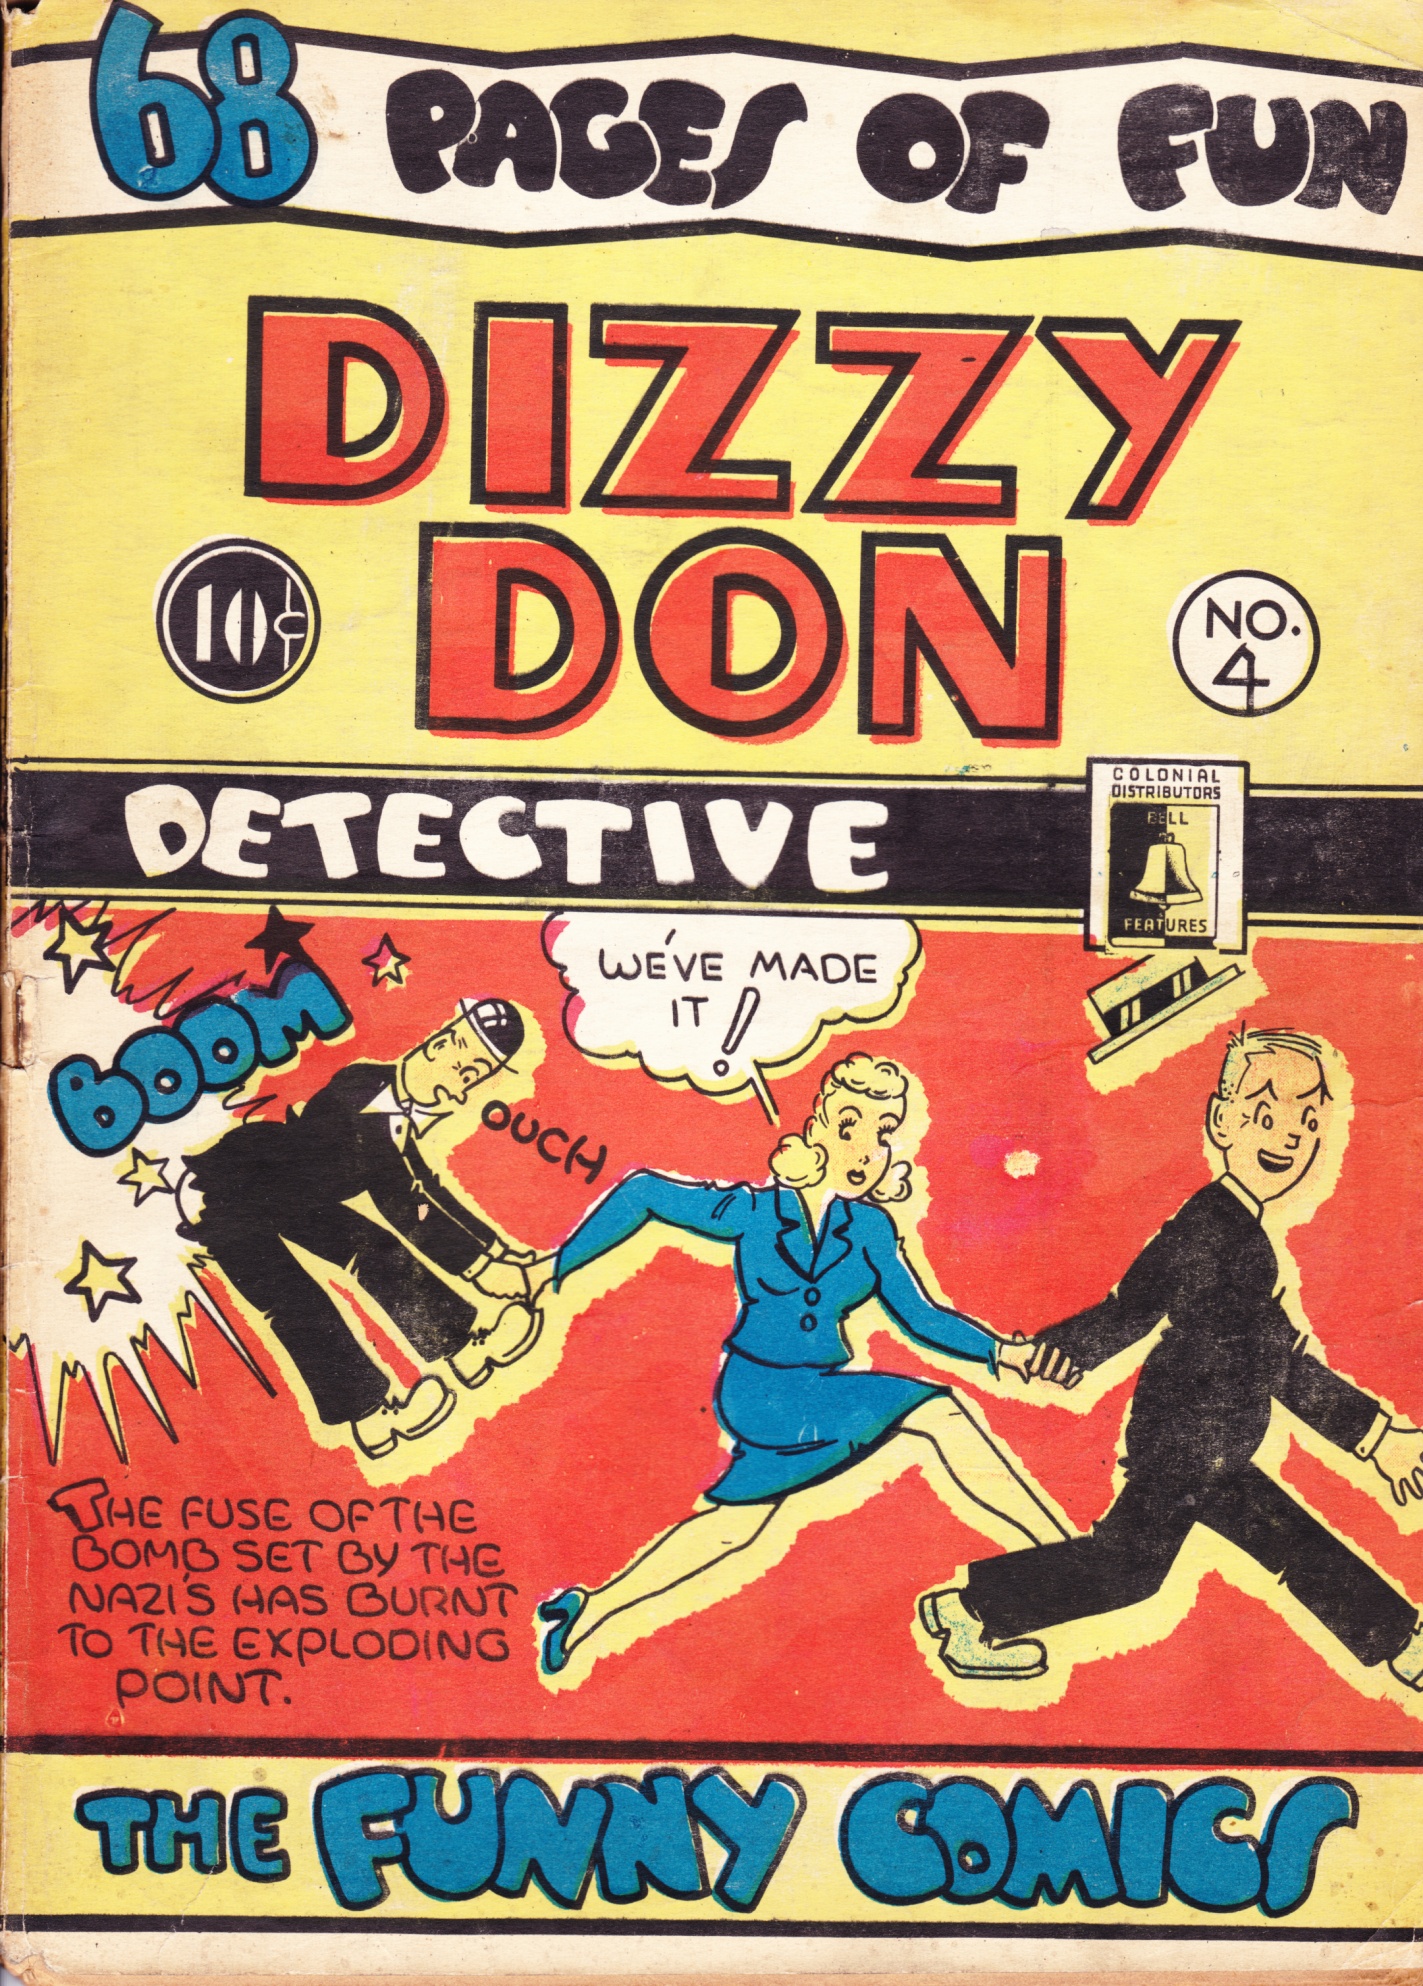 C:\Users\Robert\Documents\CARTOONING ILLUSTRATION ANIMATION\IMAGE CARTOON\Dizzy Don\DIZZY DON, Dizzy Don Detective Funny Comics, 4, fc.jpg